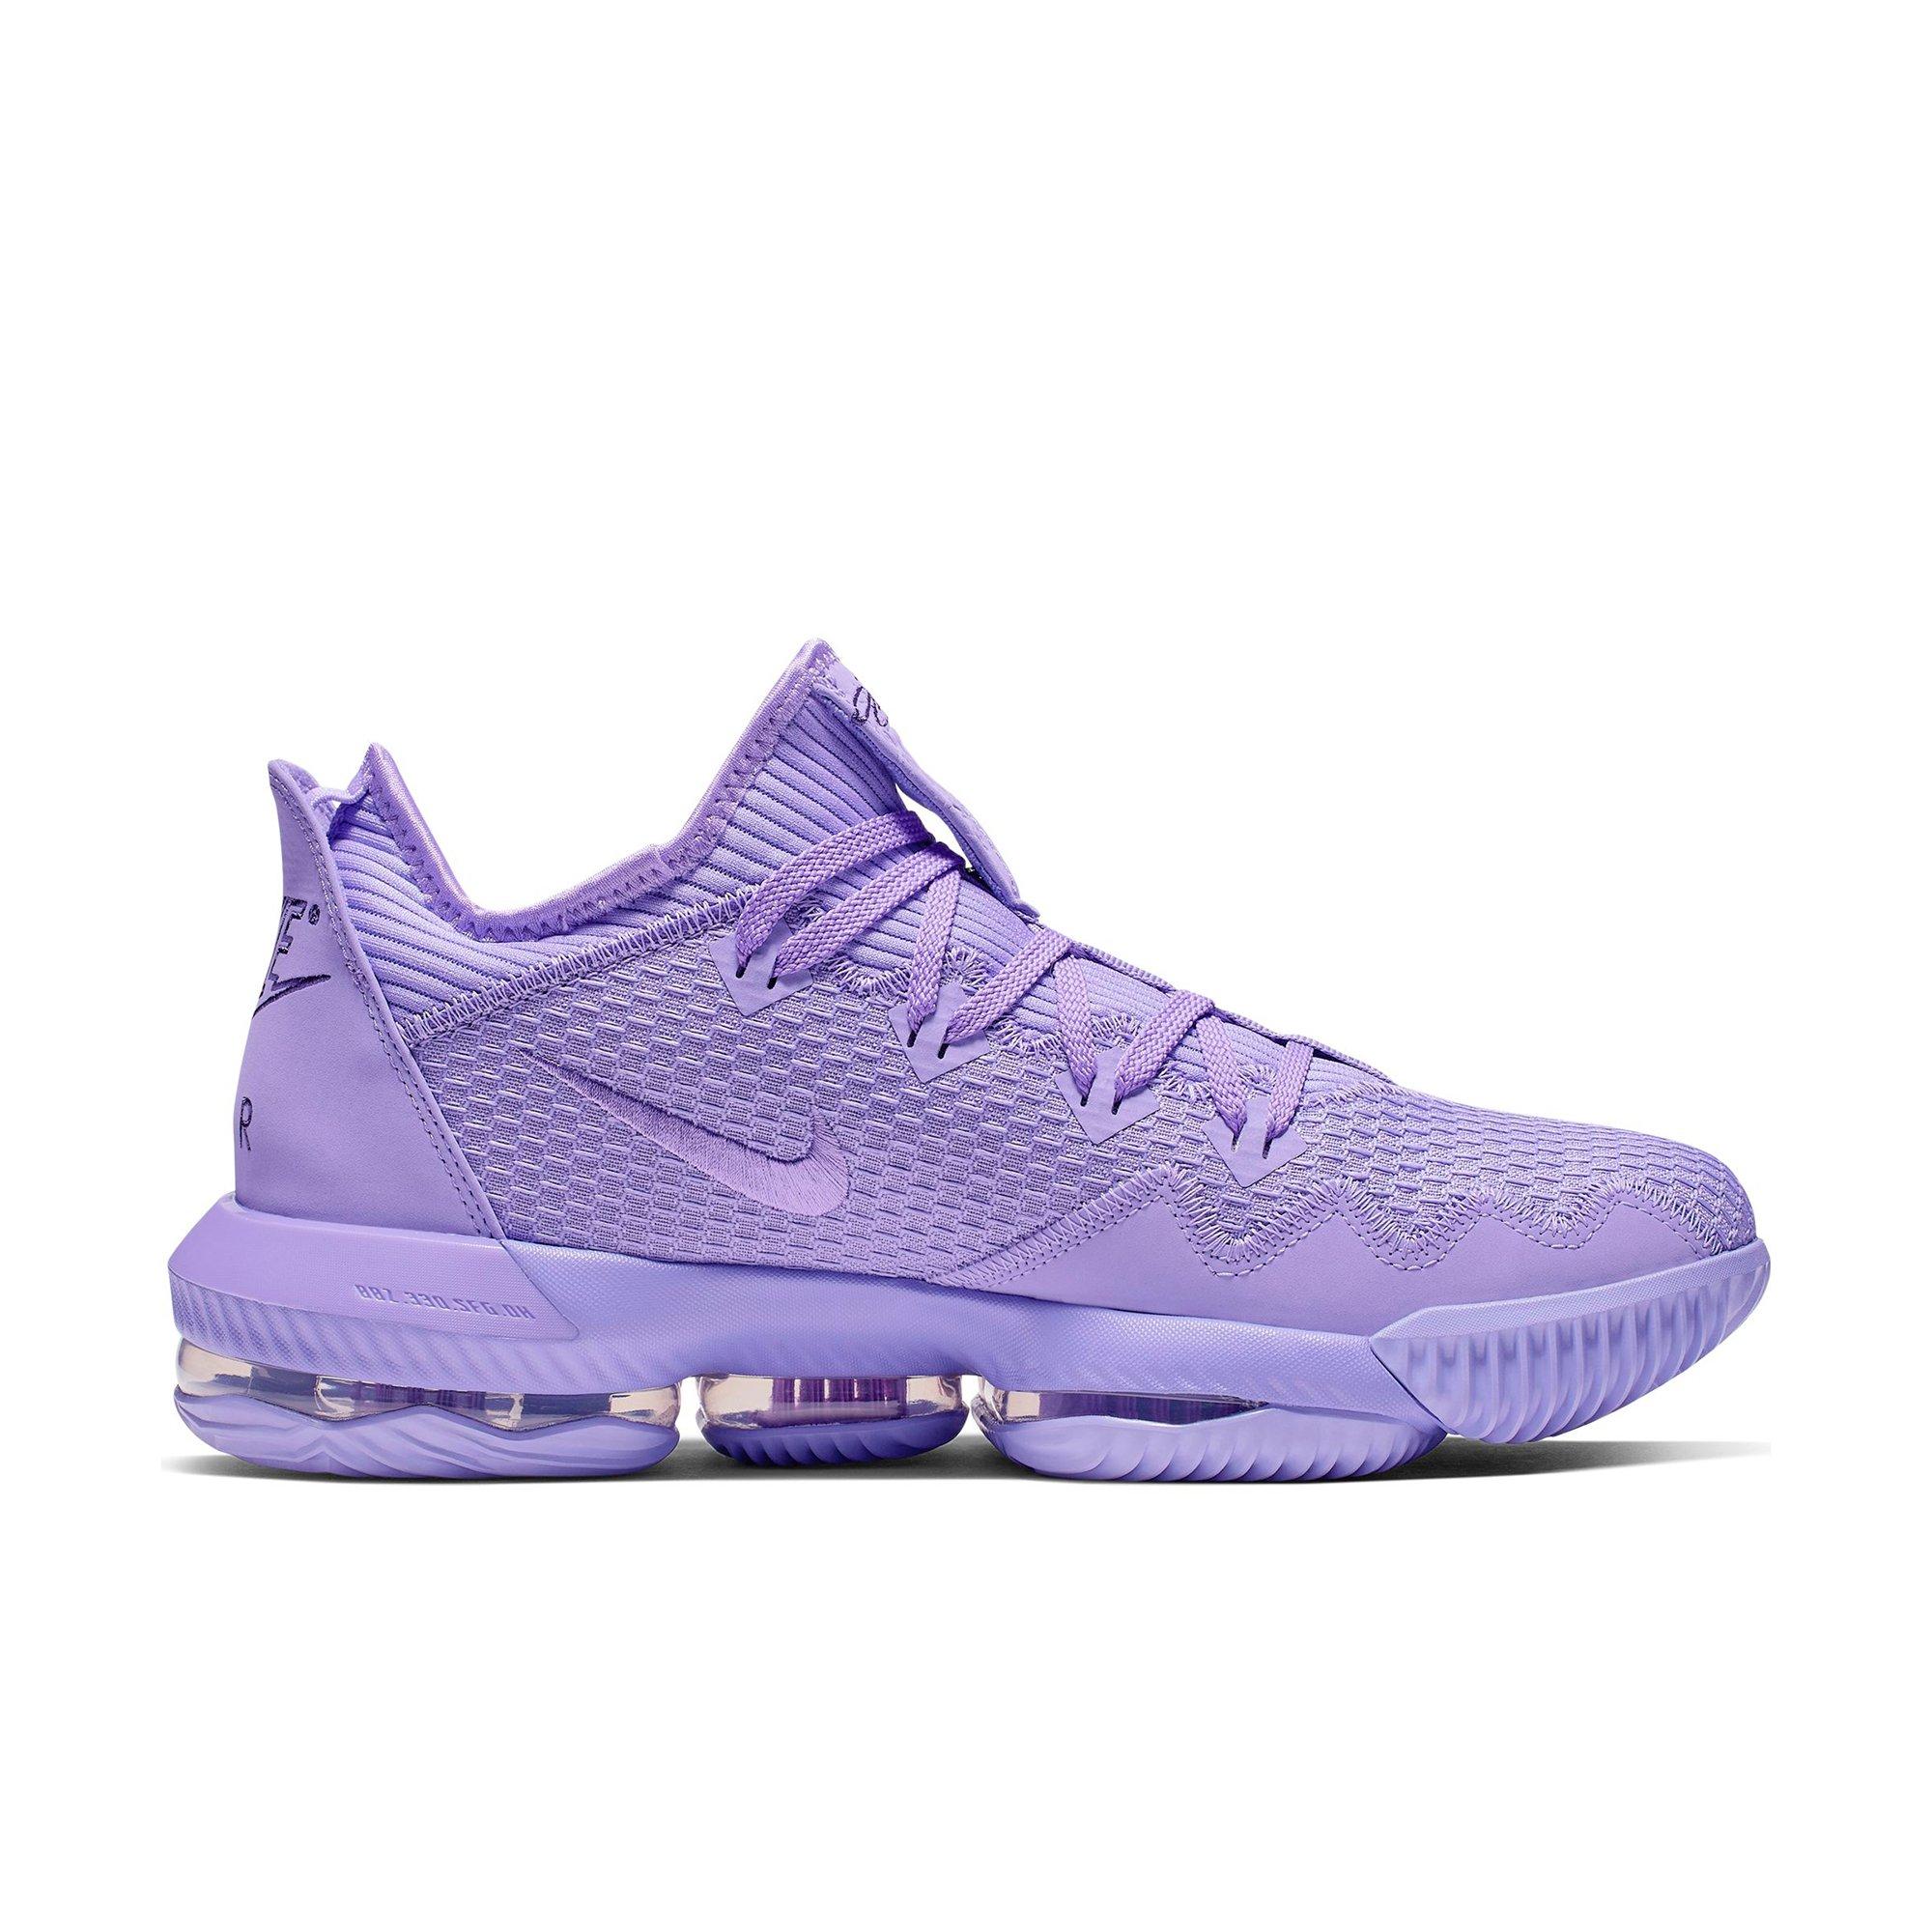 lebron purple sneakers